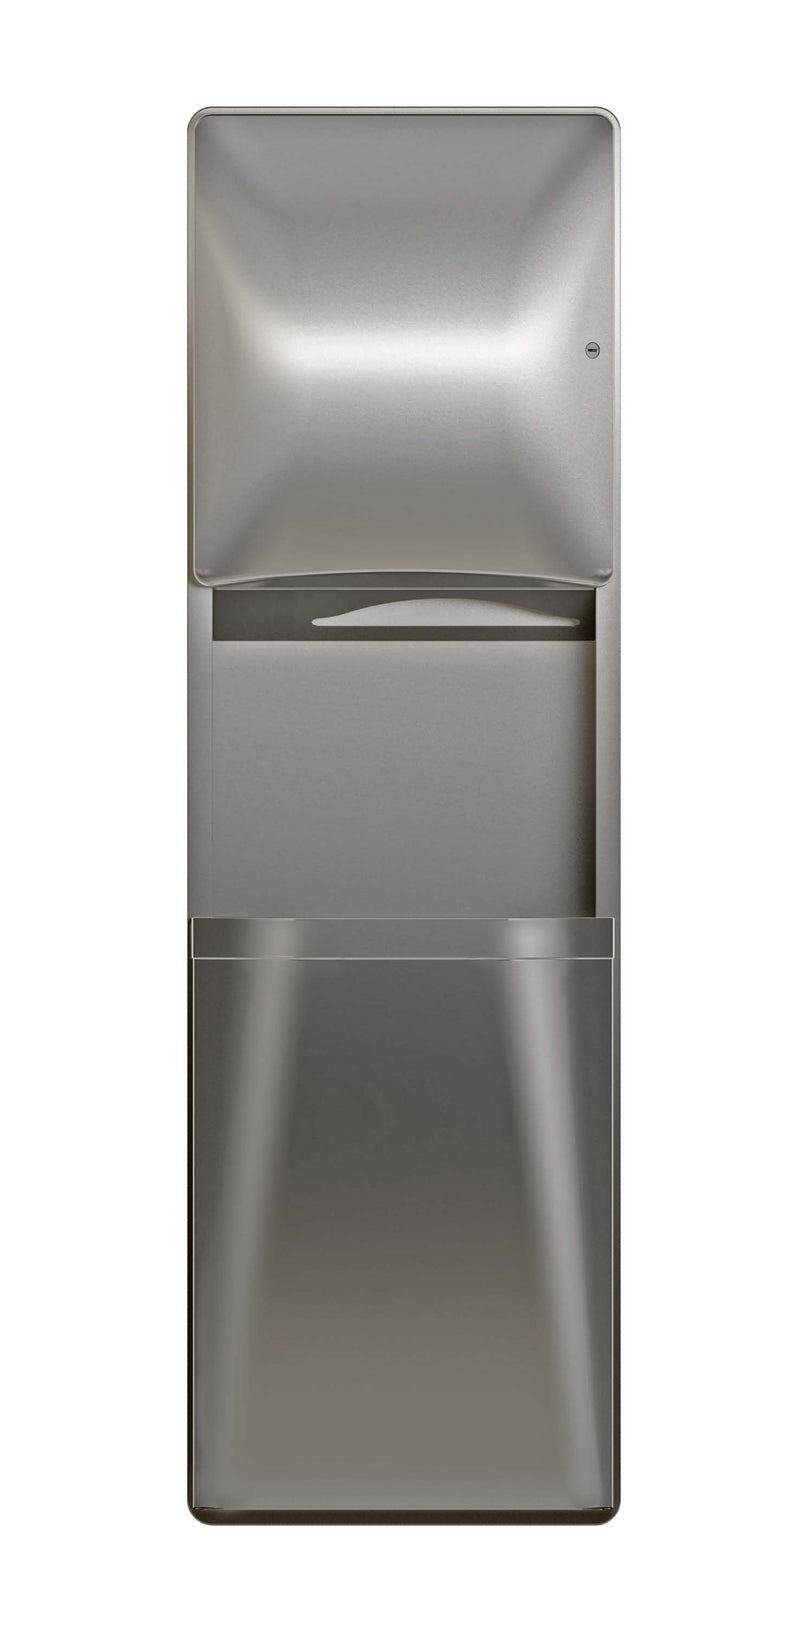 Bradley 2A05-1036 Paper Towel Dispenser Waste Receptacle Unit, Semi-Recessed